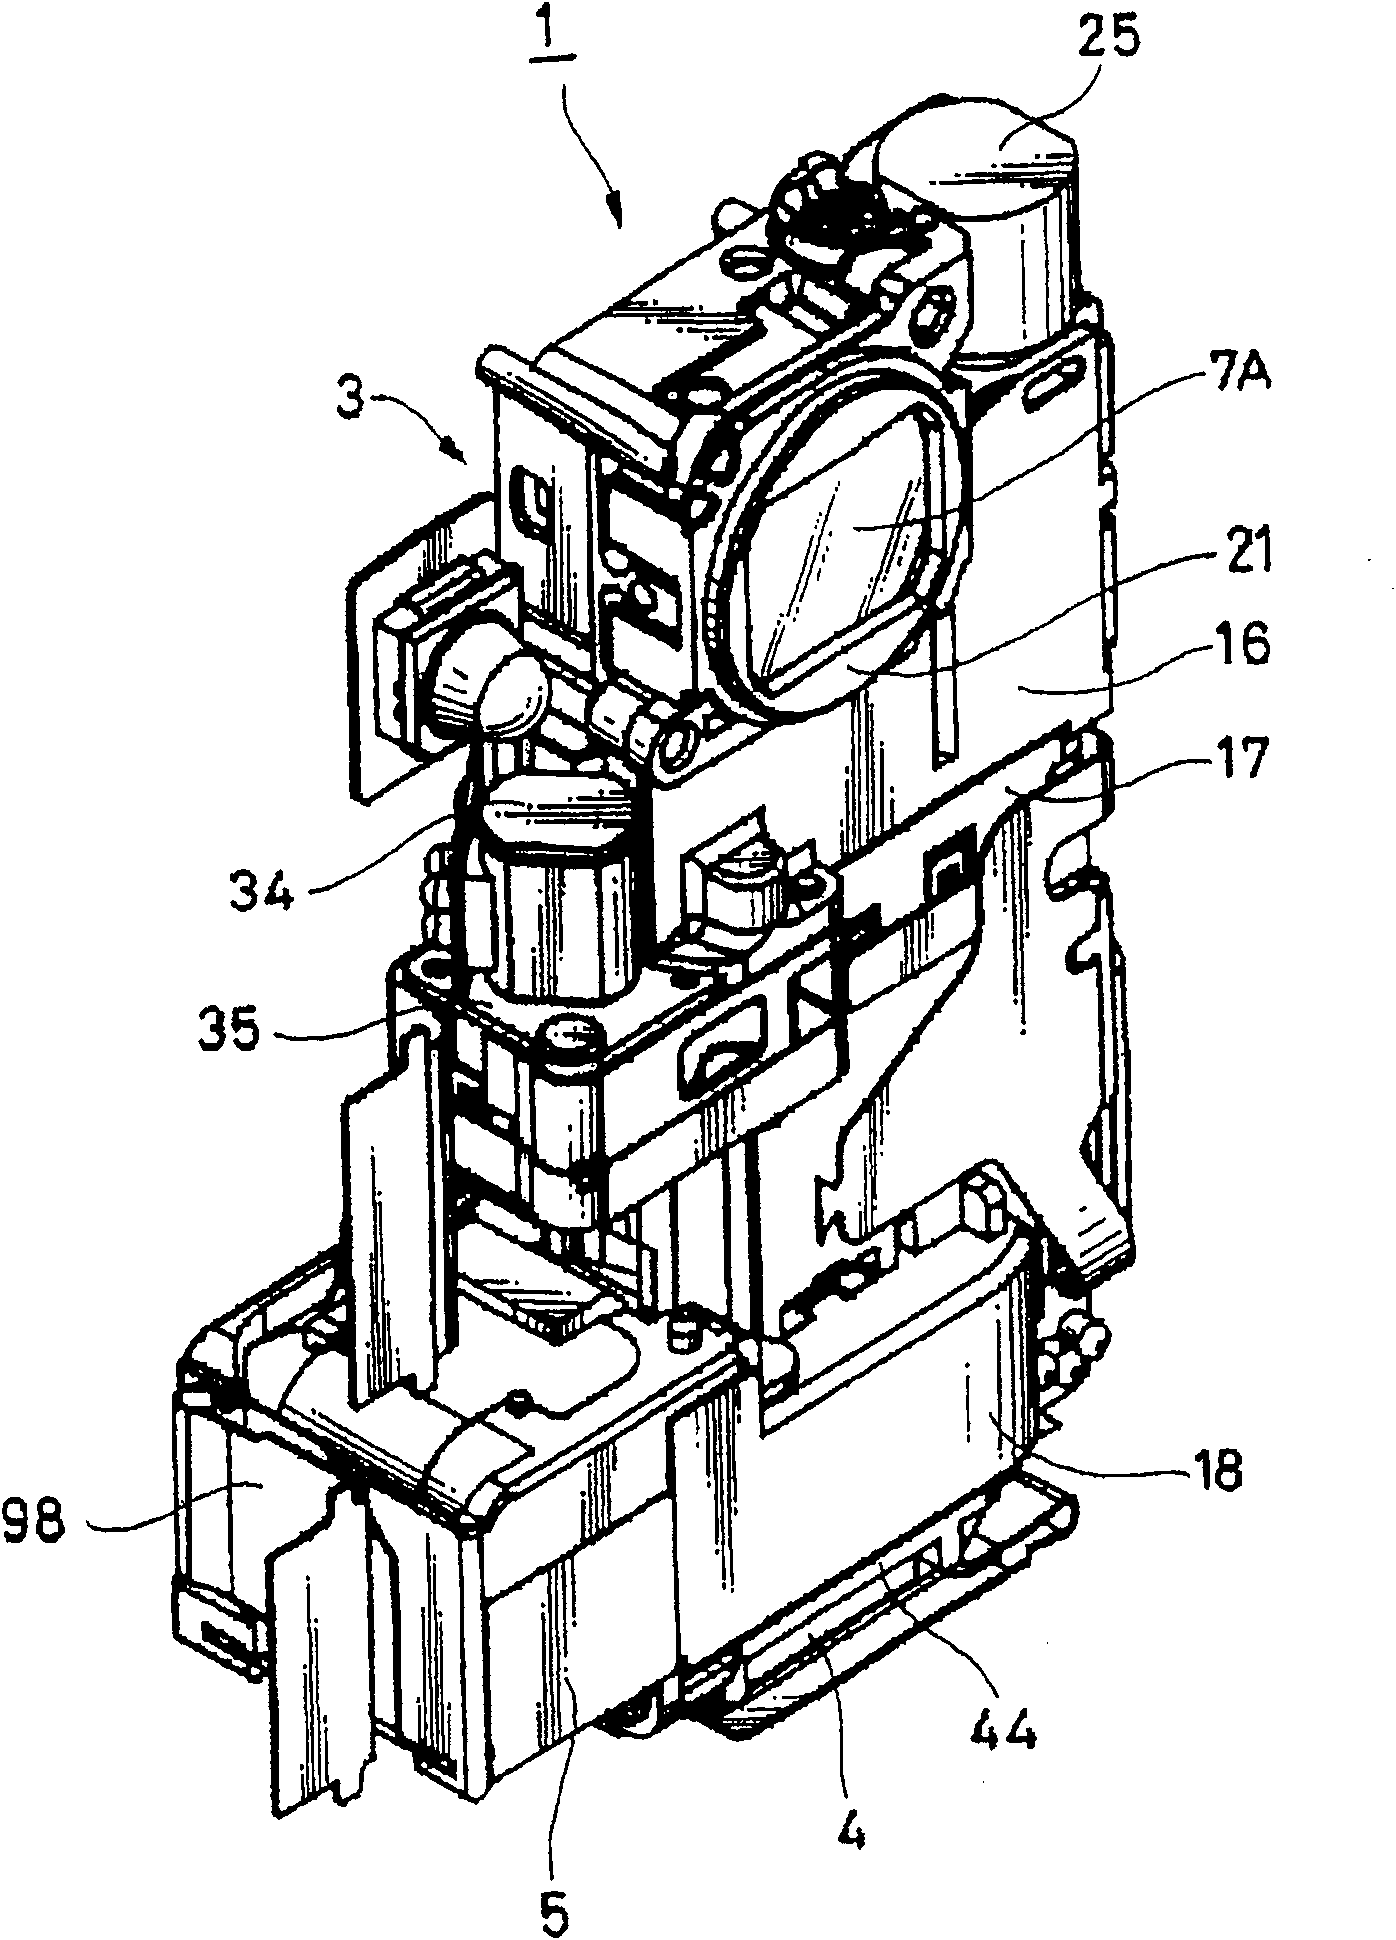 Image stabilizer, lens barrel and imaging apparatus